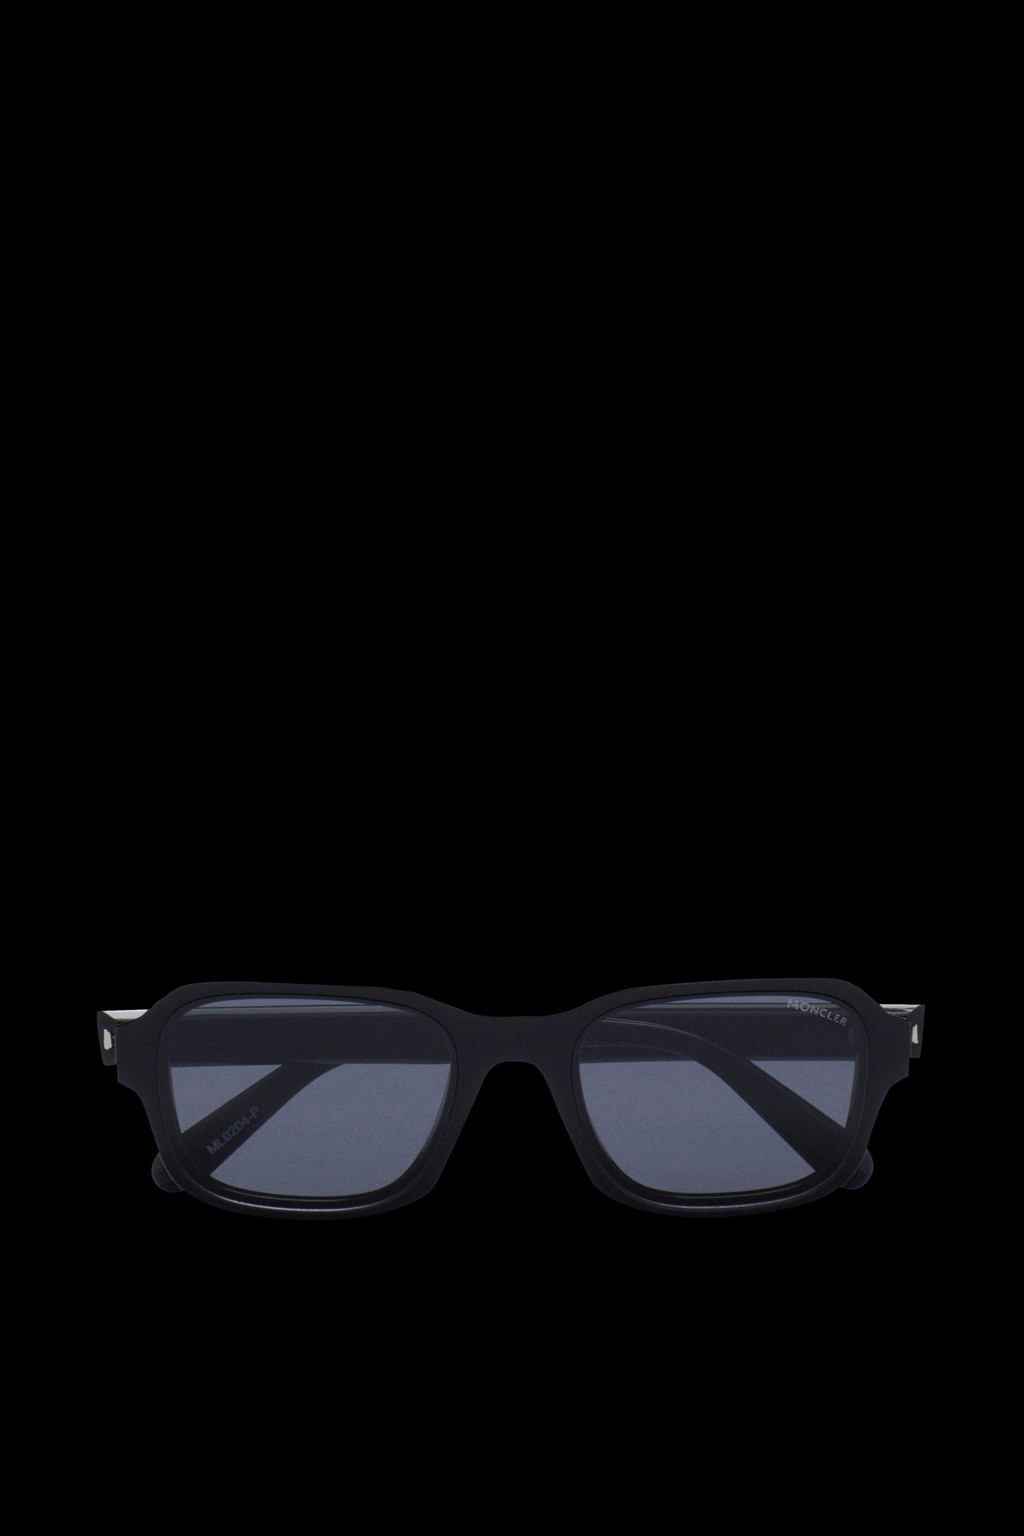 Shiny Black Rectangular Sunglasses - Moncler x Frgmnt for Genius